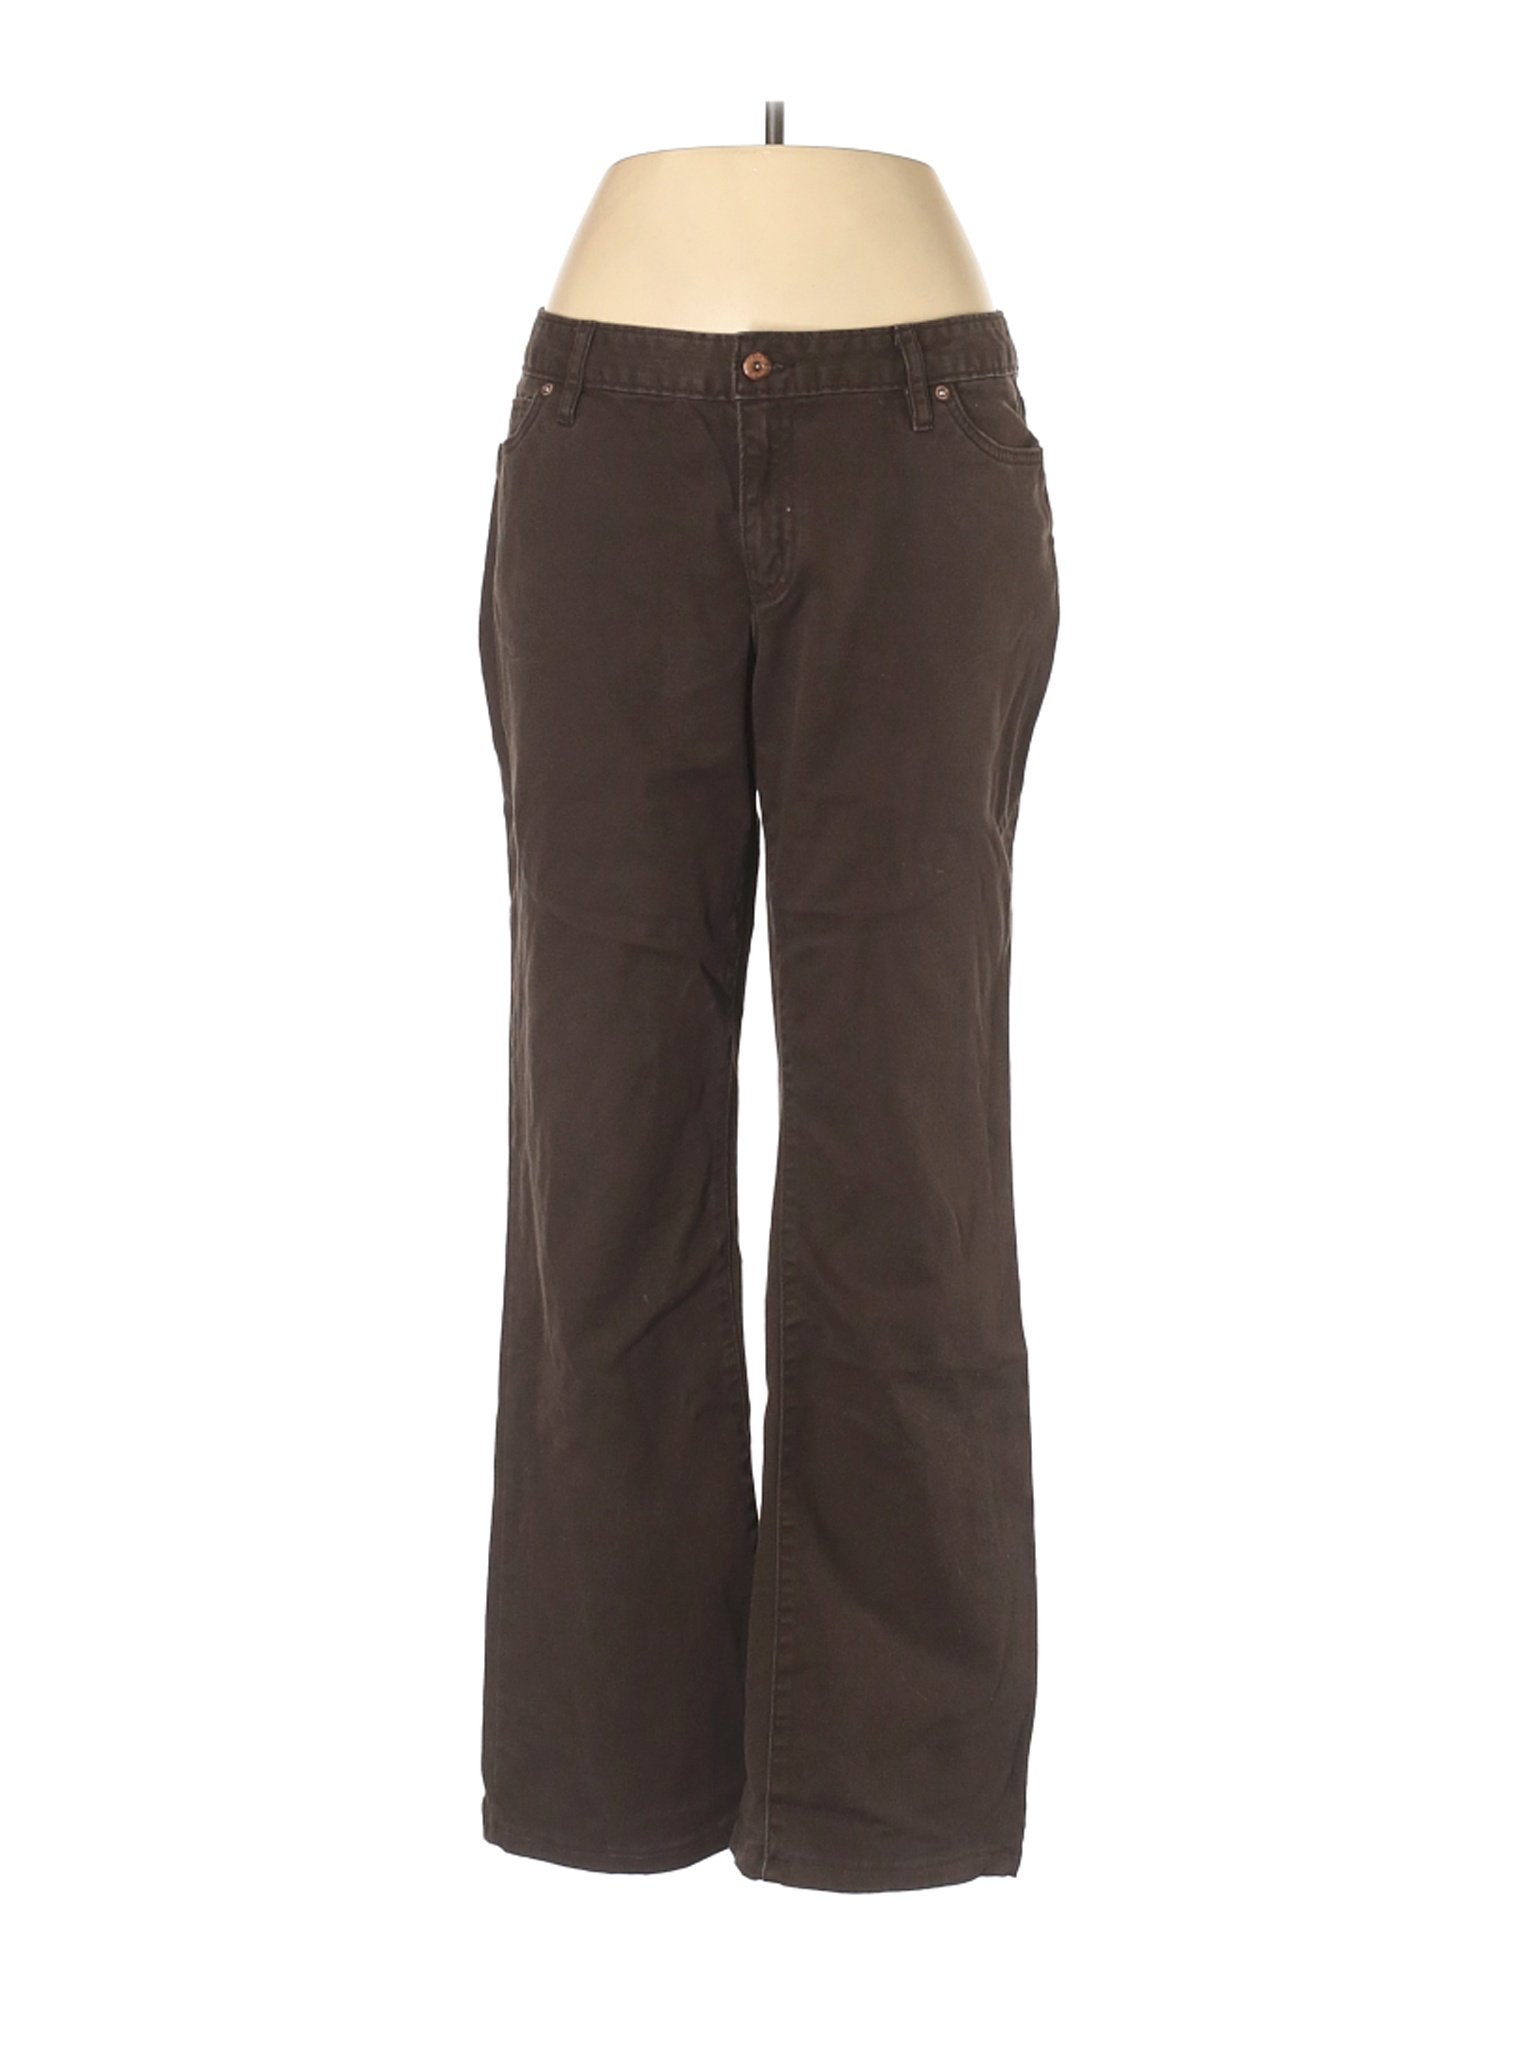 Lands' End Women Brown Jeans 12 | eBay